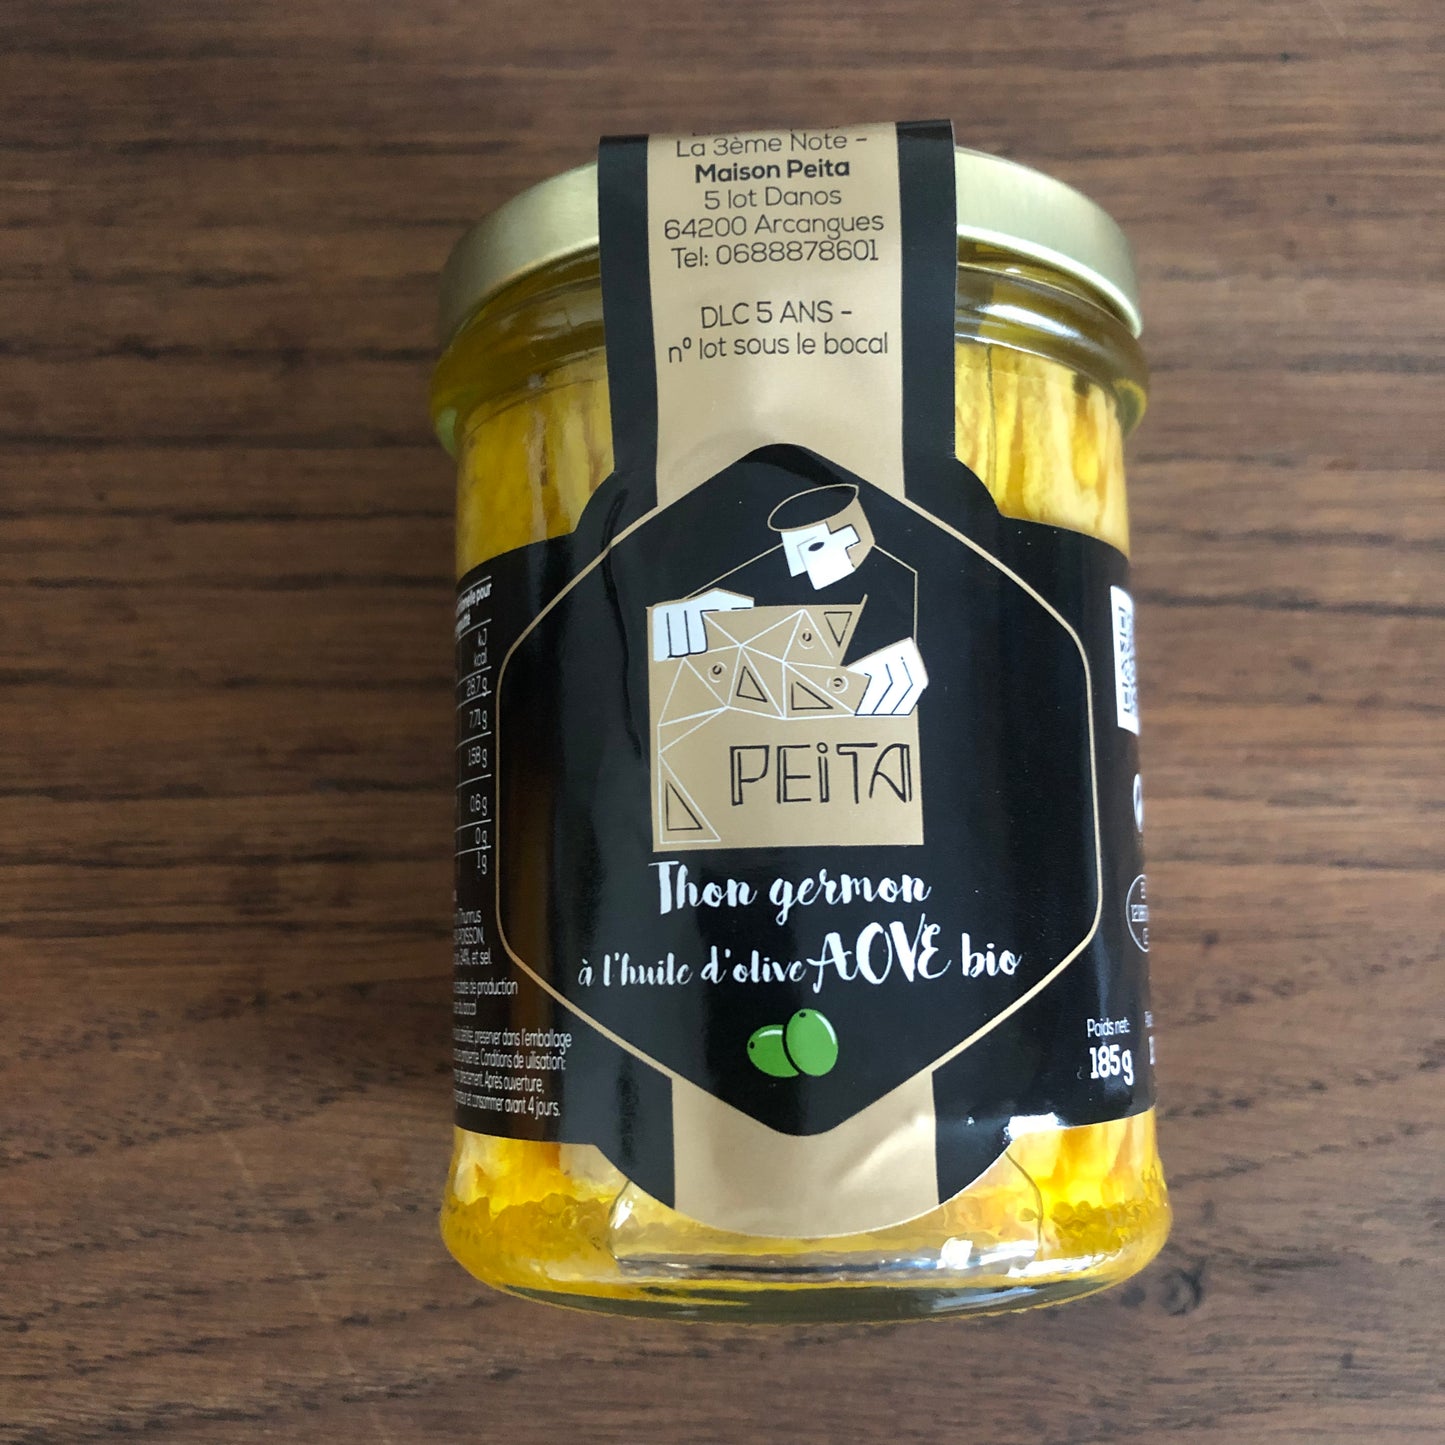 Thon germon huile d'olive extra vierge bio, bonito del norte,peita